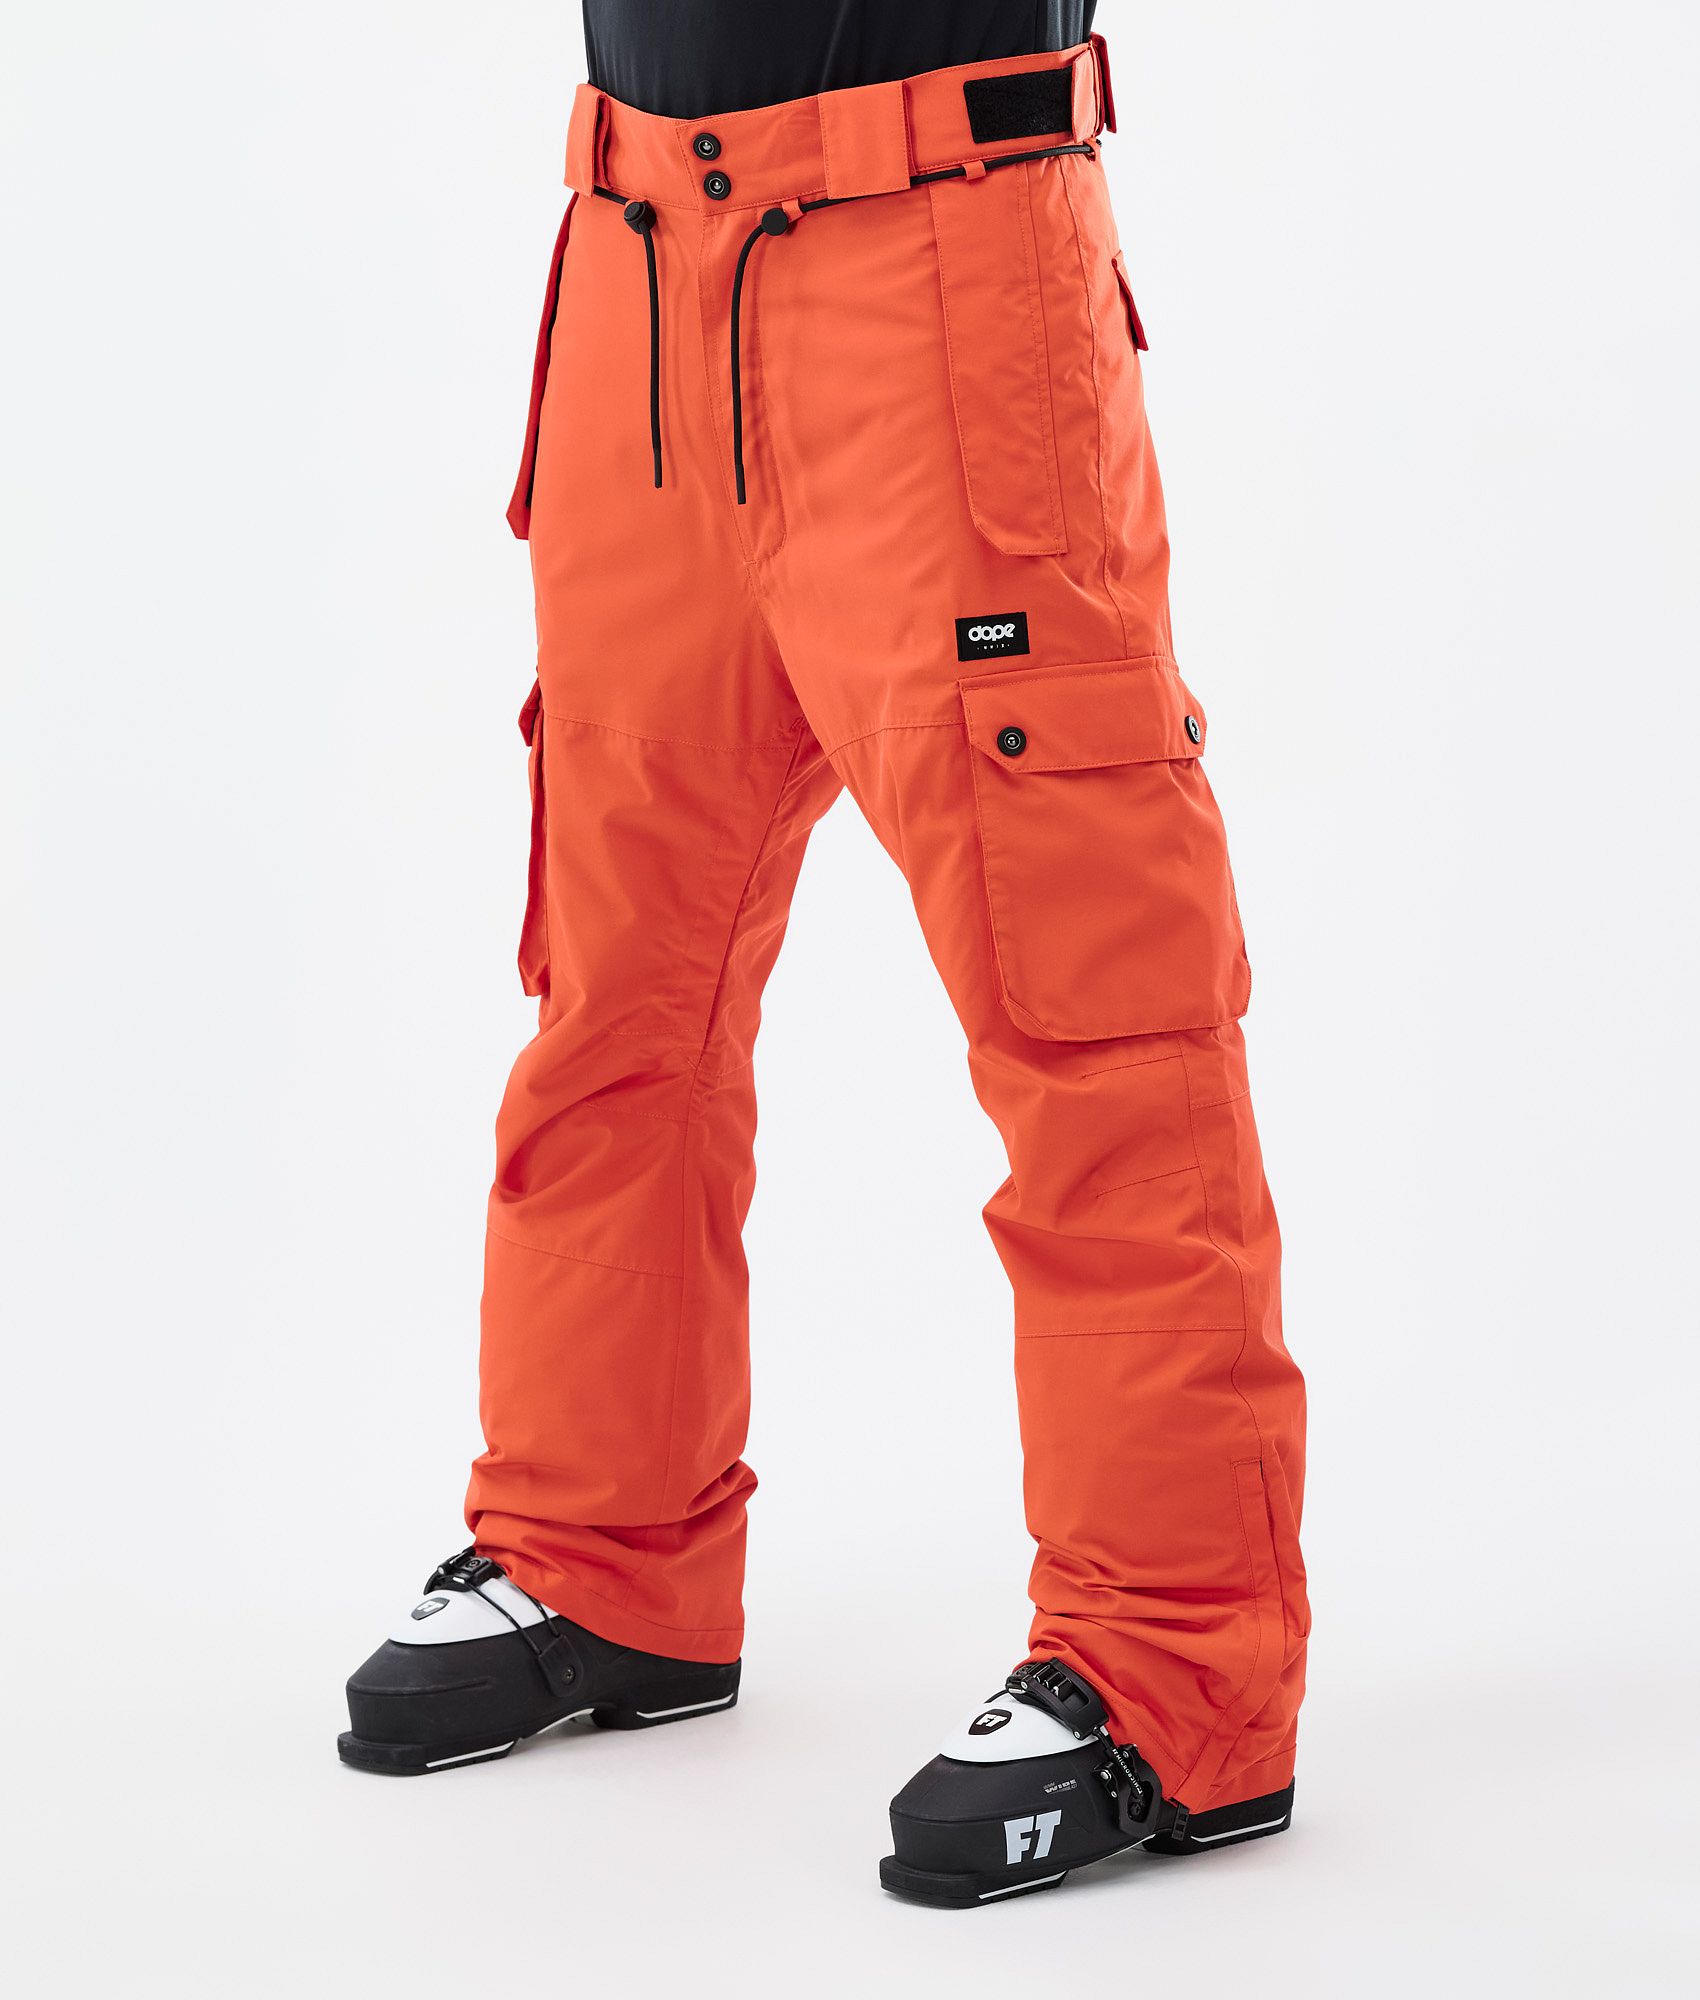 Ultrasport Amud Pantalon de Ski Homme 